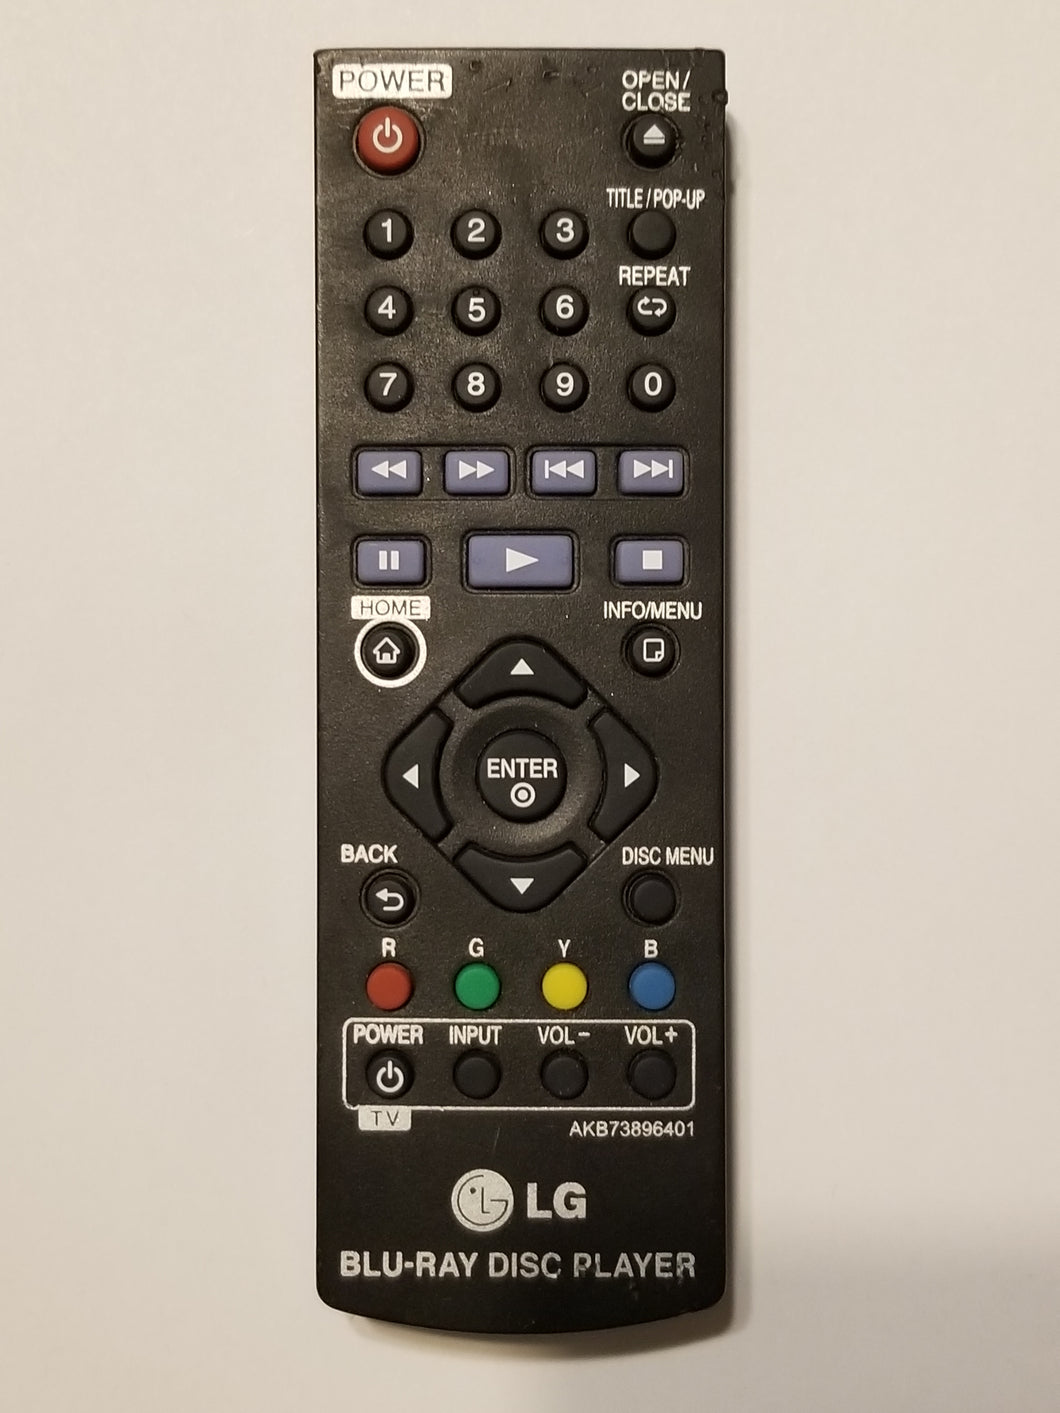 AKB73896401 LG Blu-ray Disc Player Remote Control